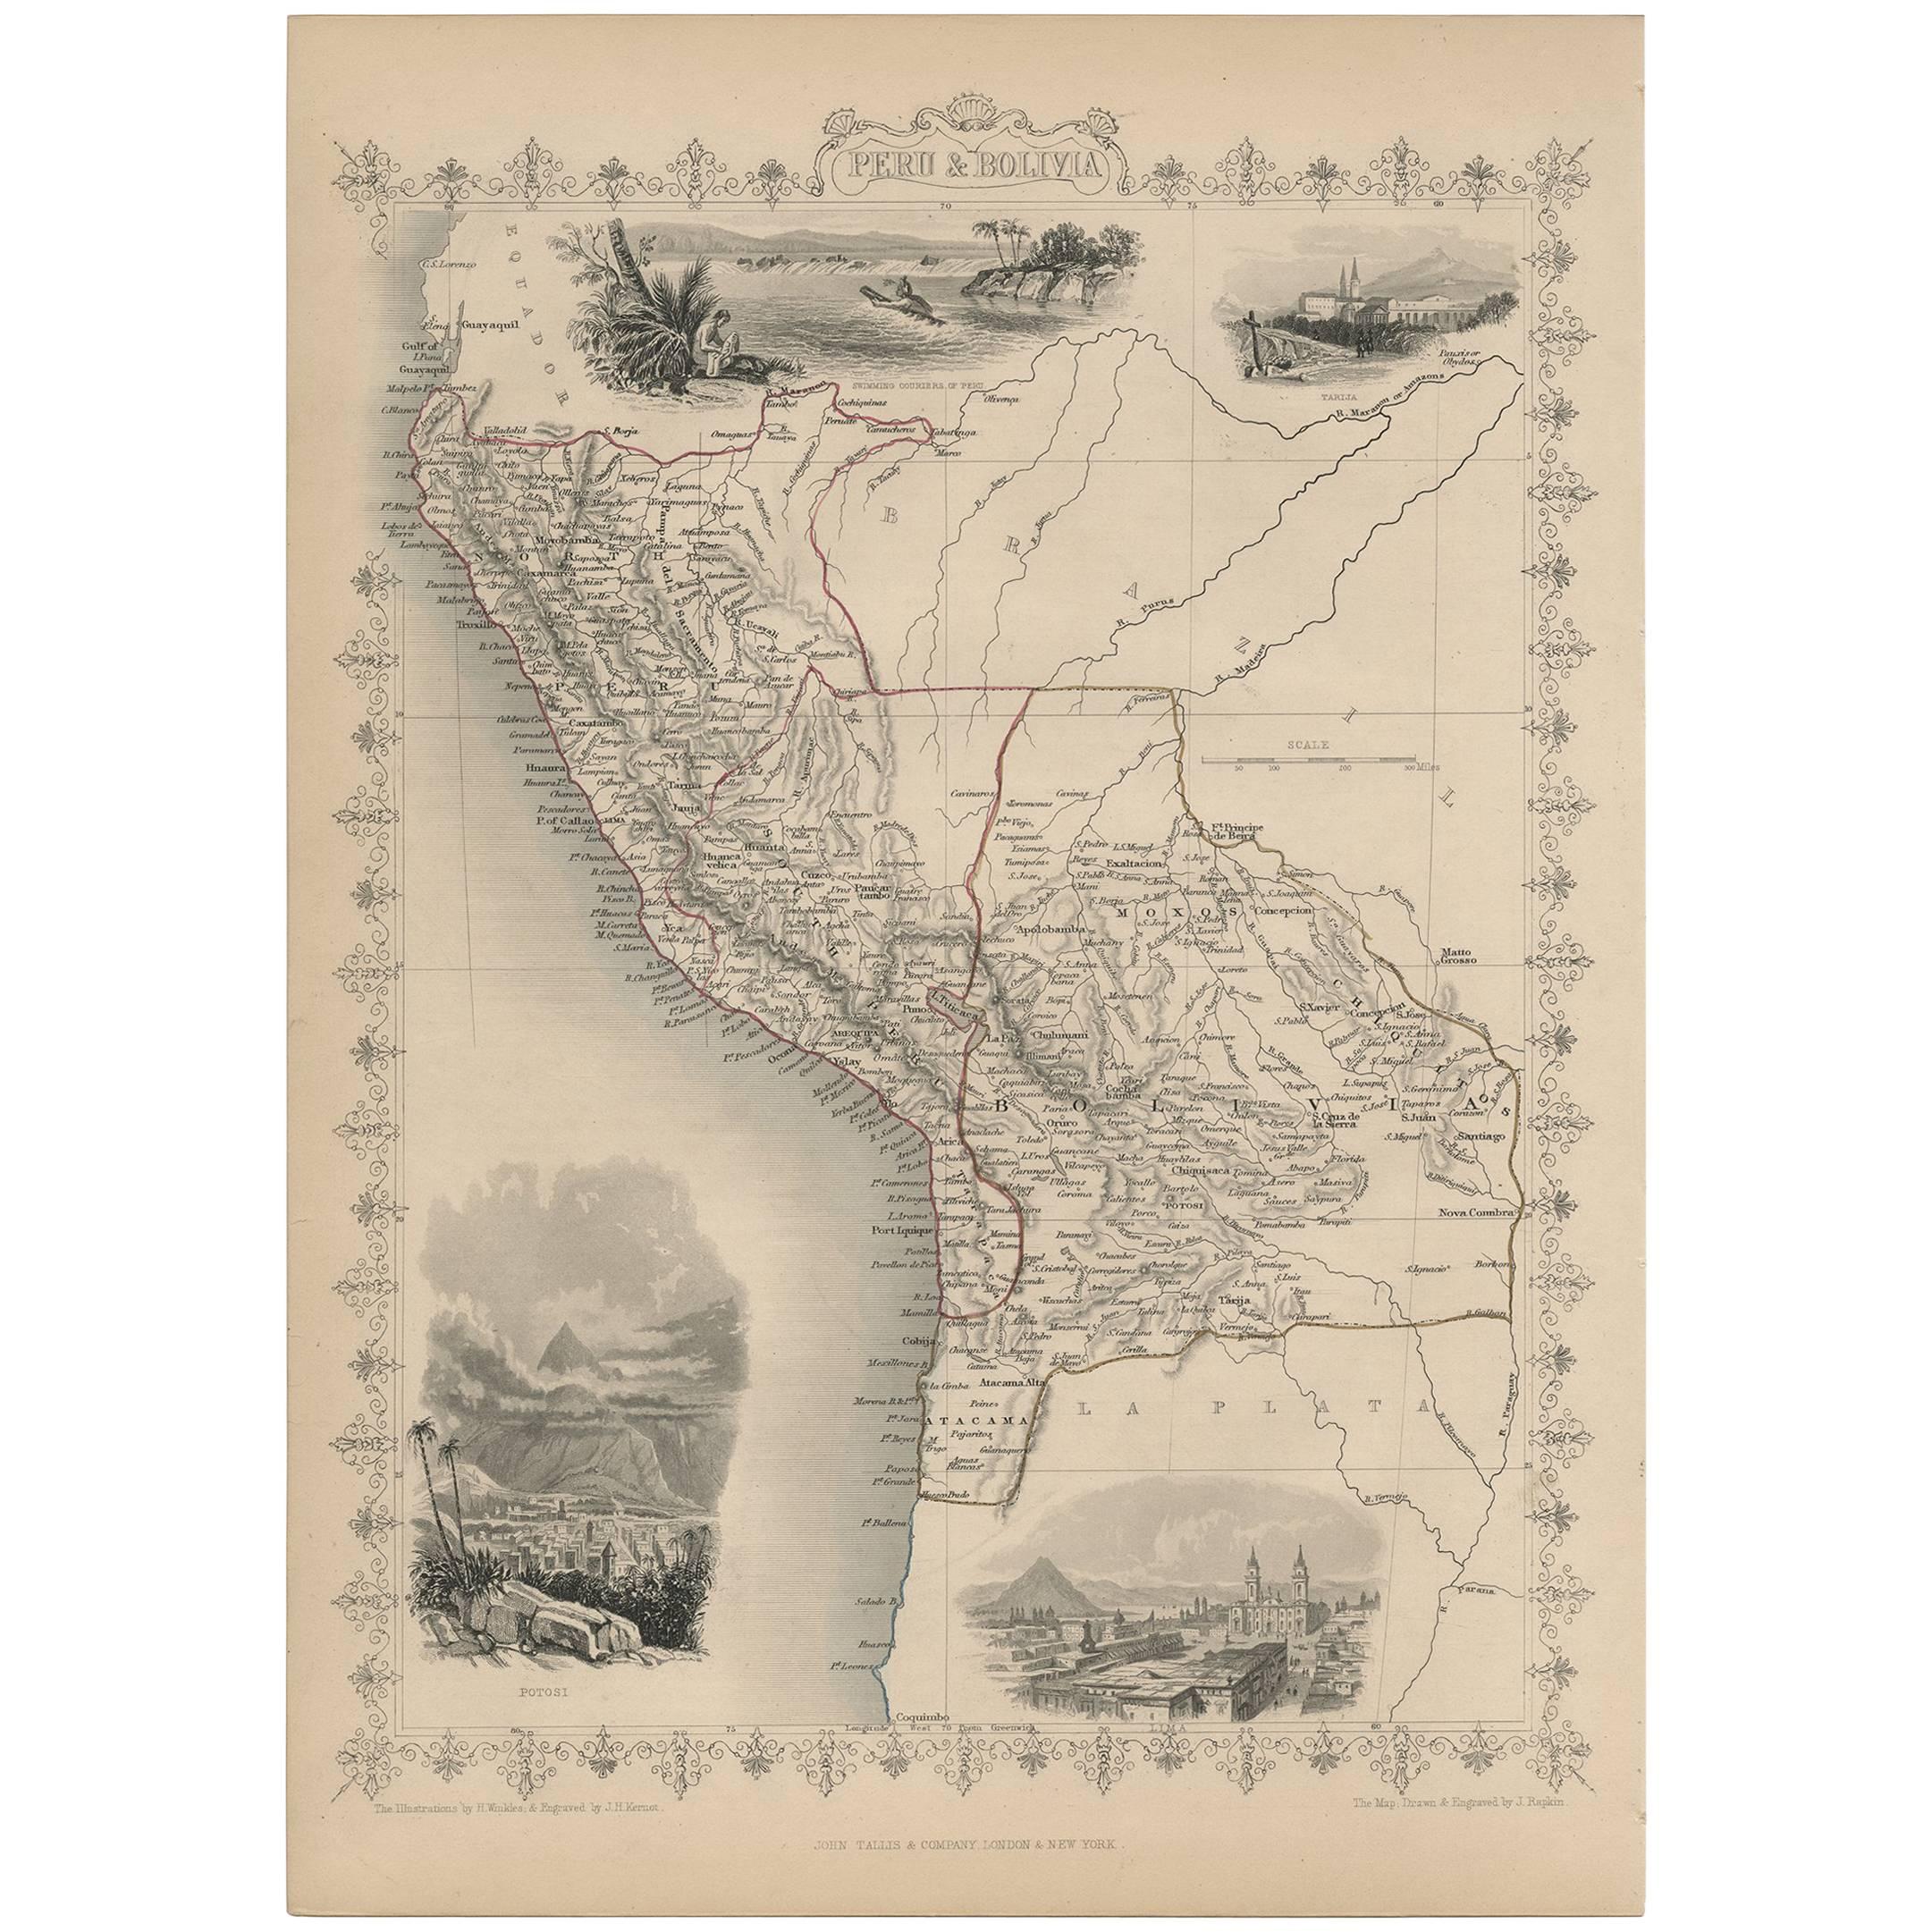 Antique Map of Peru and Bolivia by J. Tallis, circa 1851